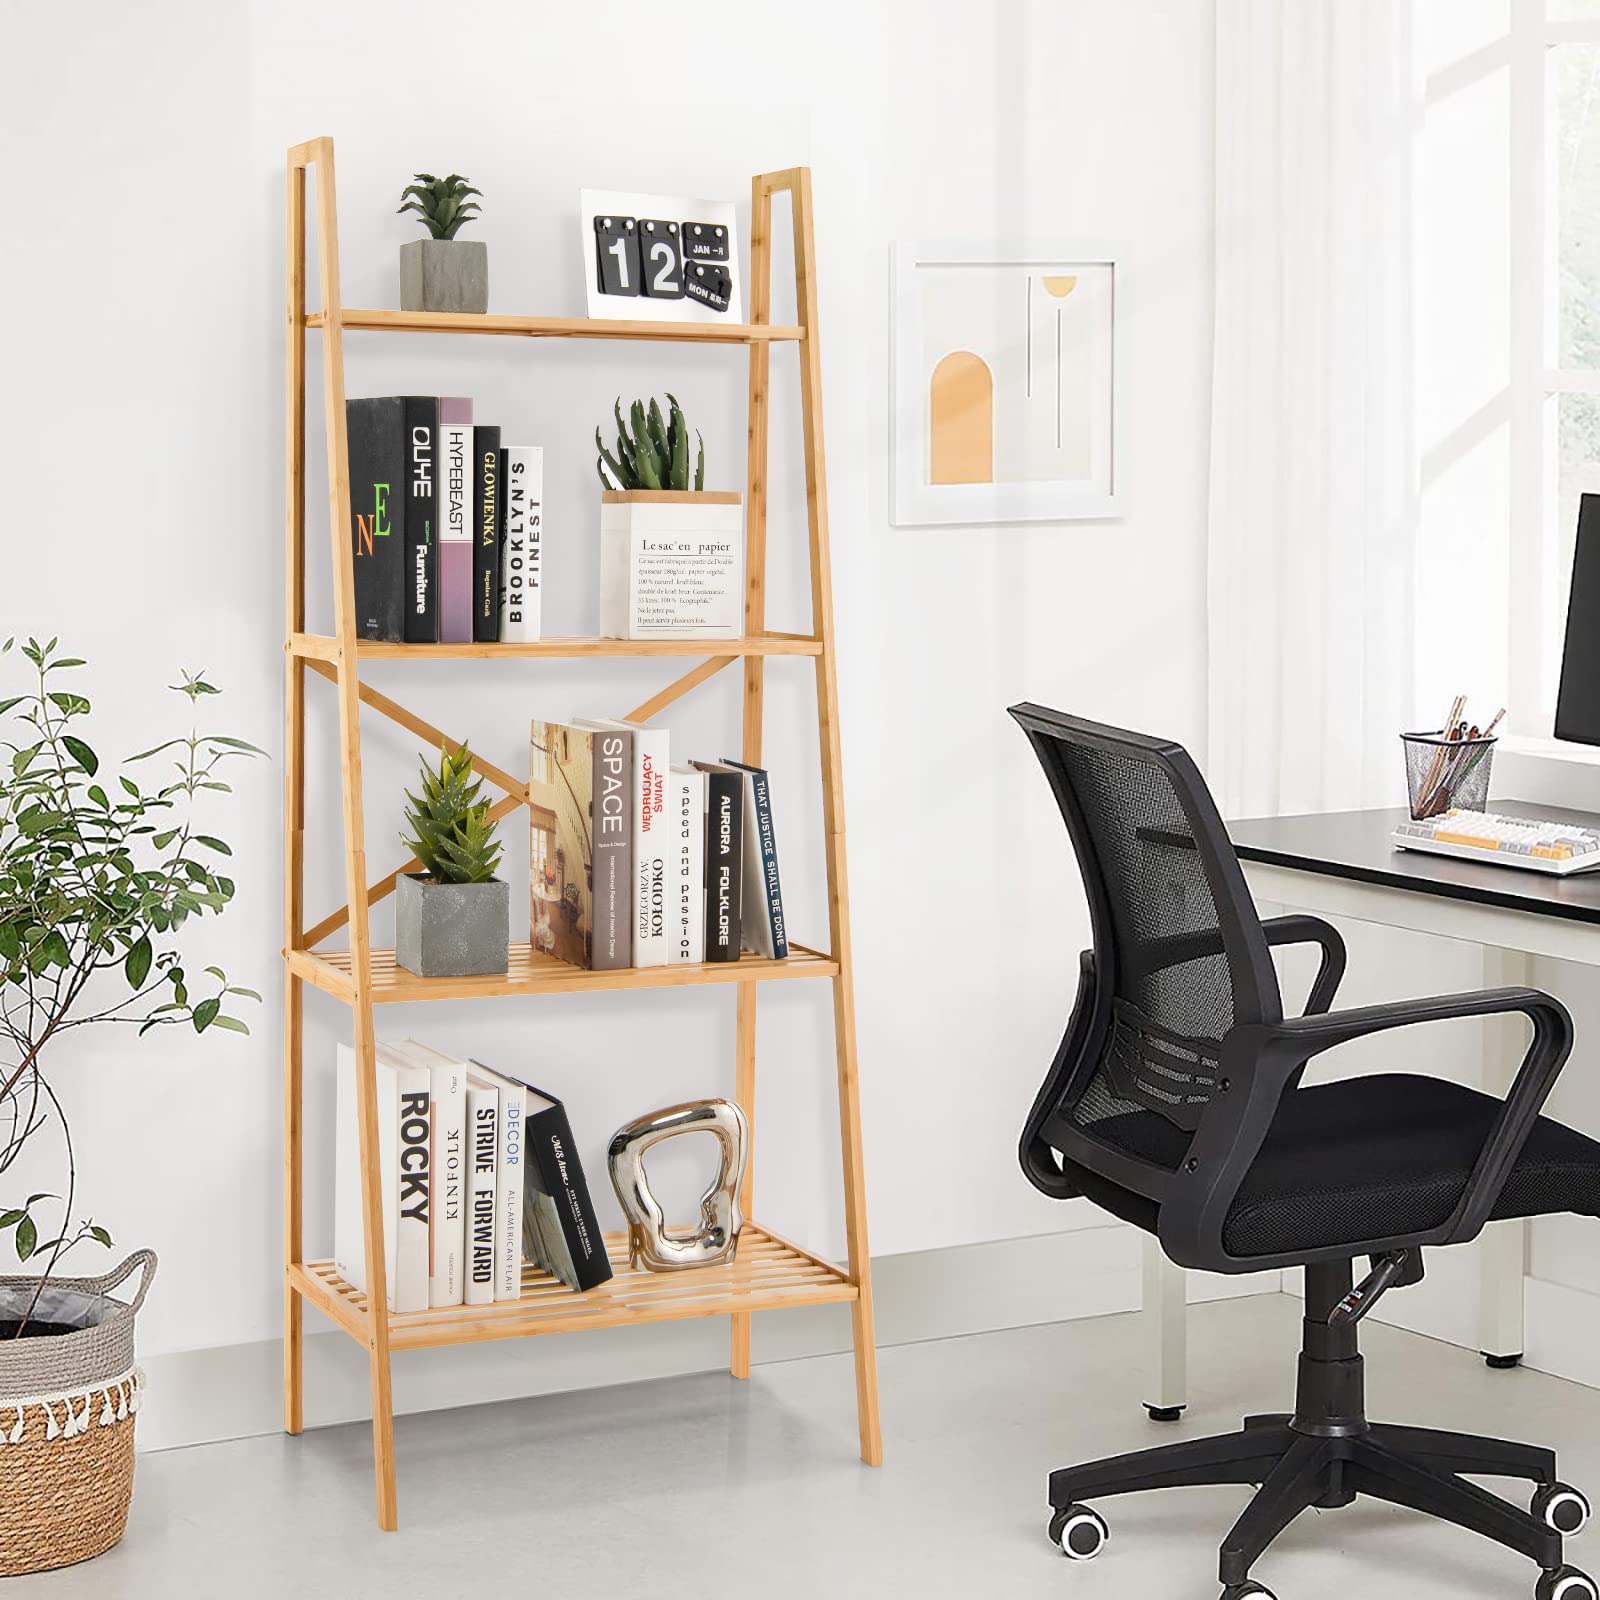 Giantex 4-Tier Bamboo Bookshelf, Multifunctional Storage Display Rack Shelves with Anti-Tipping Device